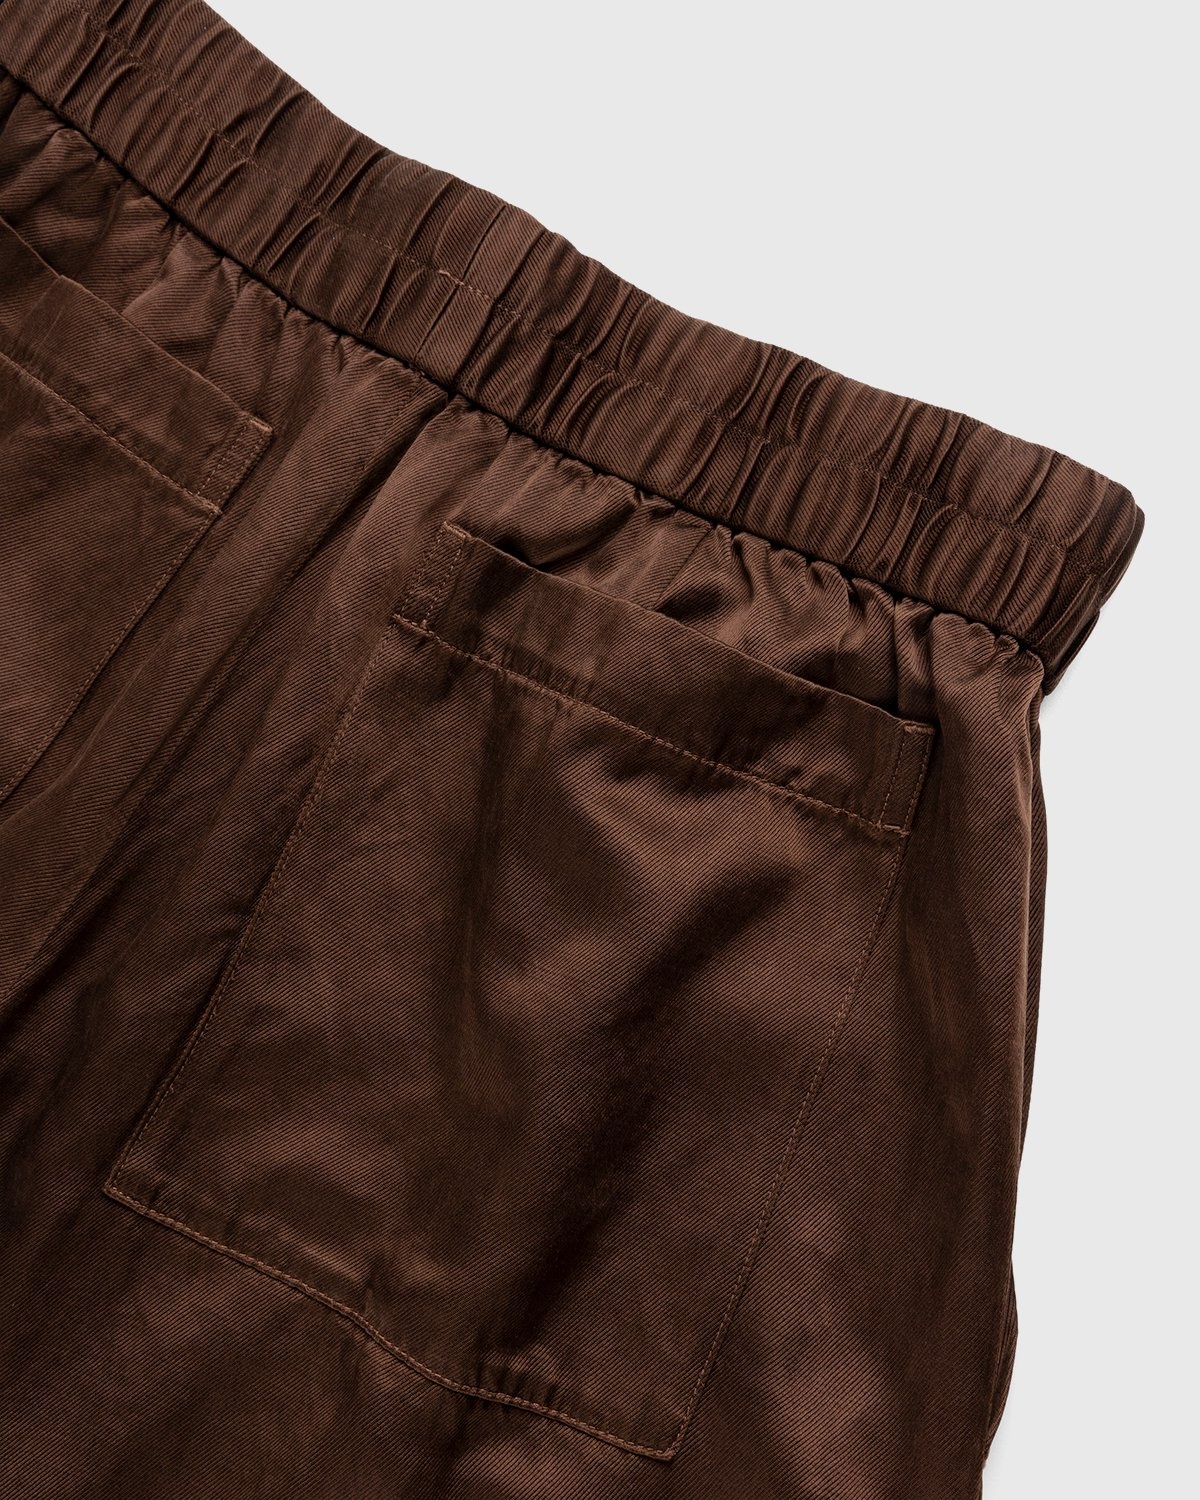 Dries van Noten – Pooles Shorts Brown - Shorts - Brown - Image 3